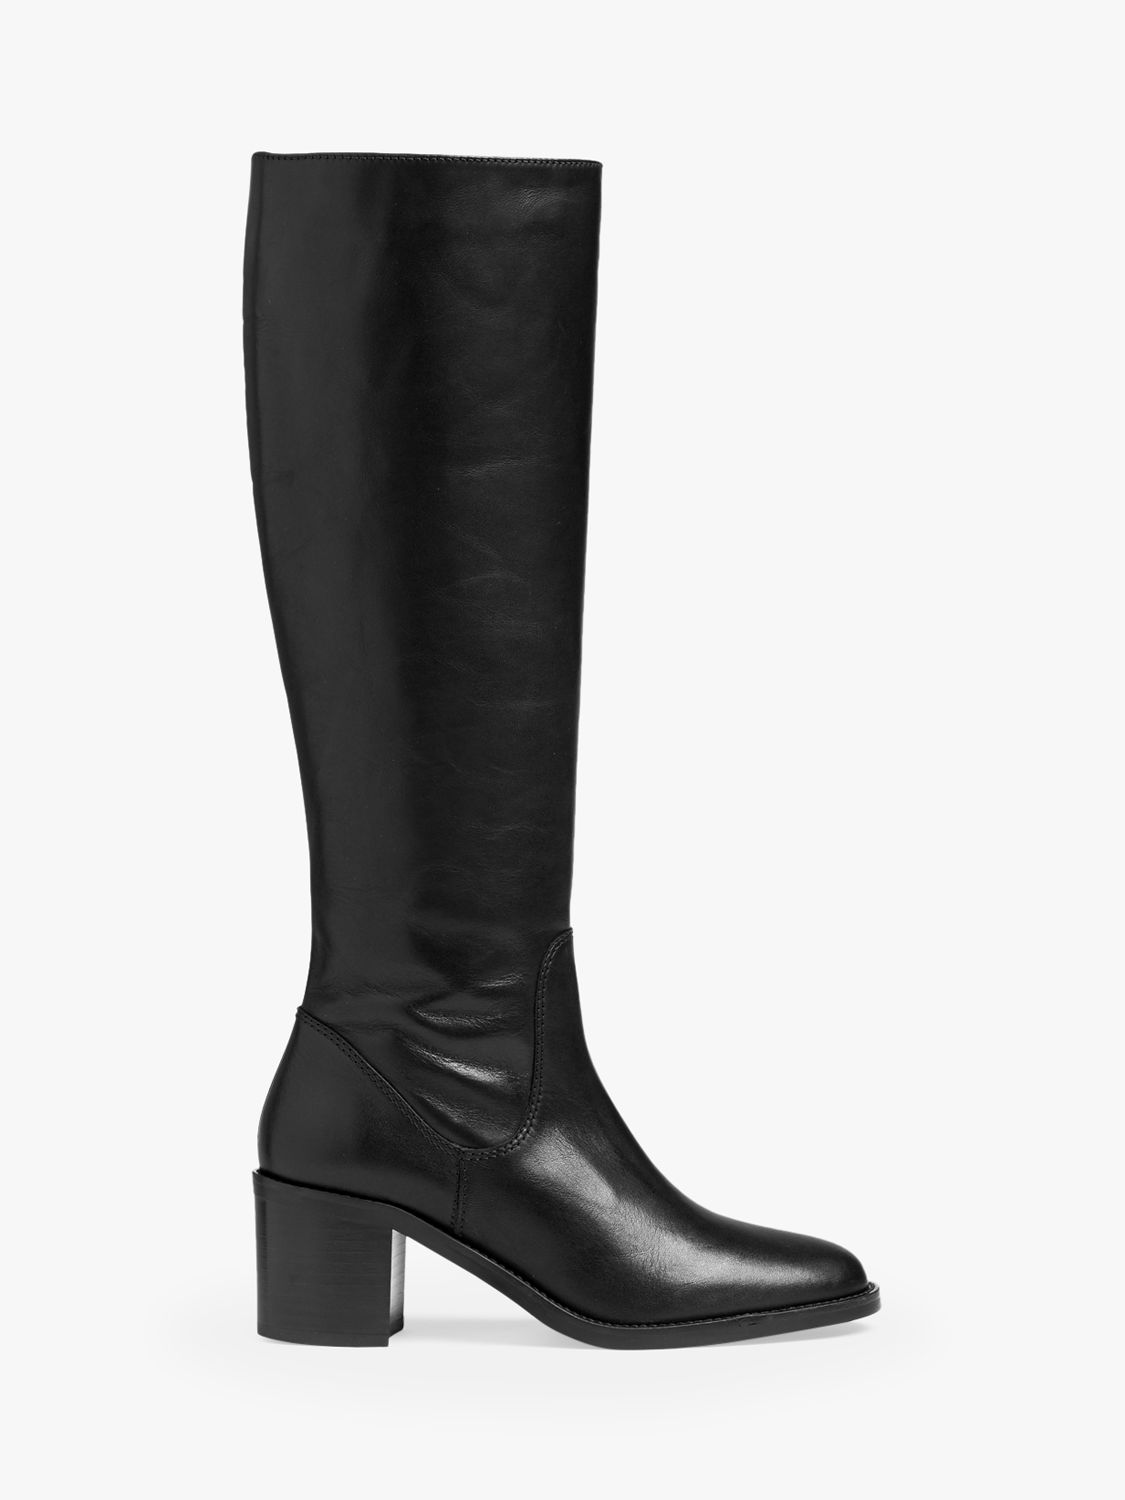 L.K.Bennett Yulia Leather Knee High Boots, Black at John Lewis & Partners